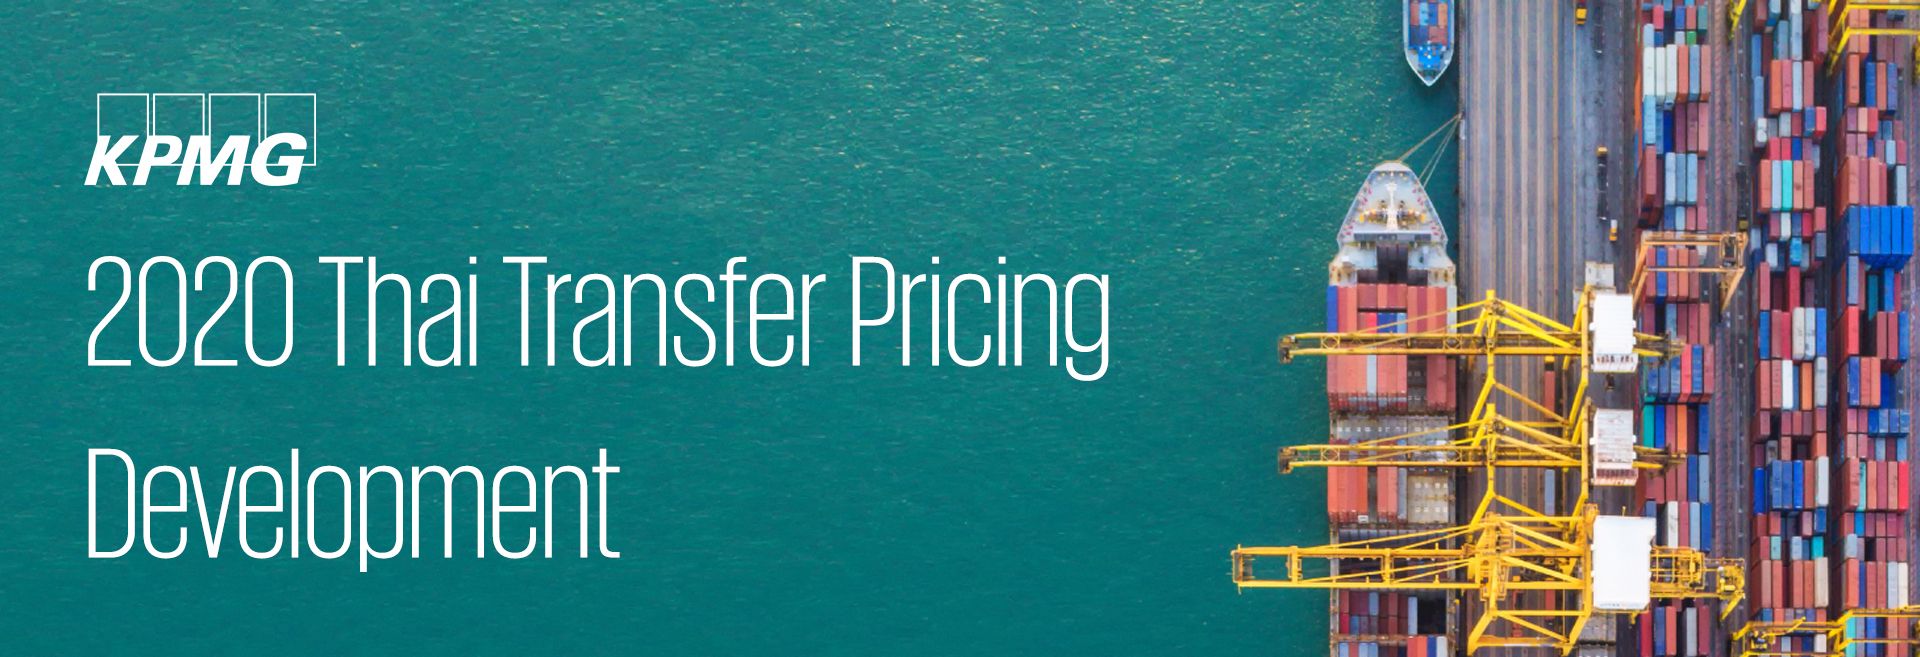 2020 Thai Transfer Pricing Development